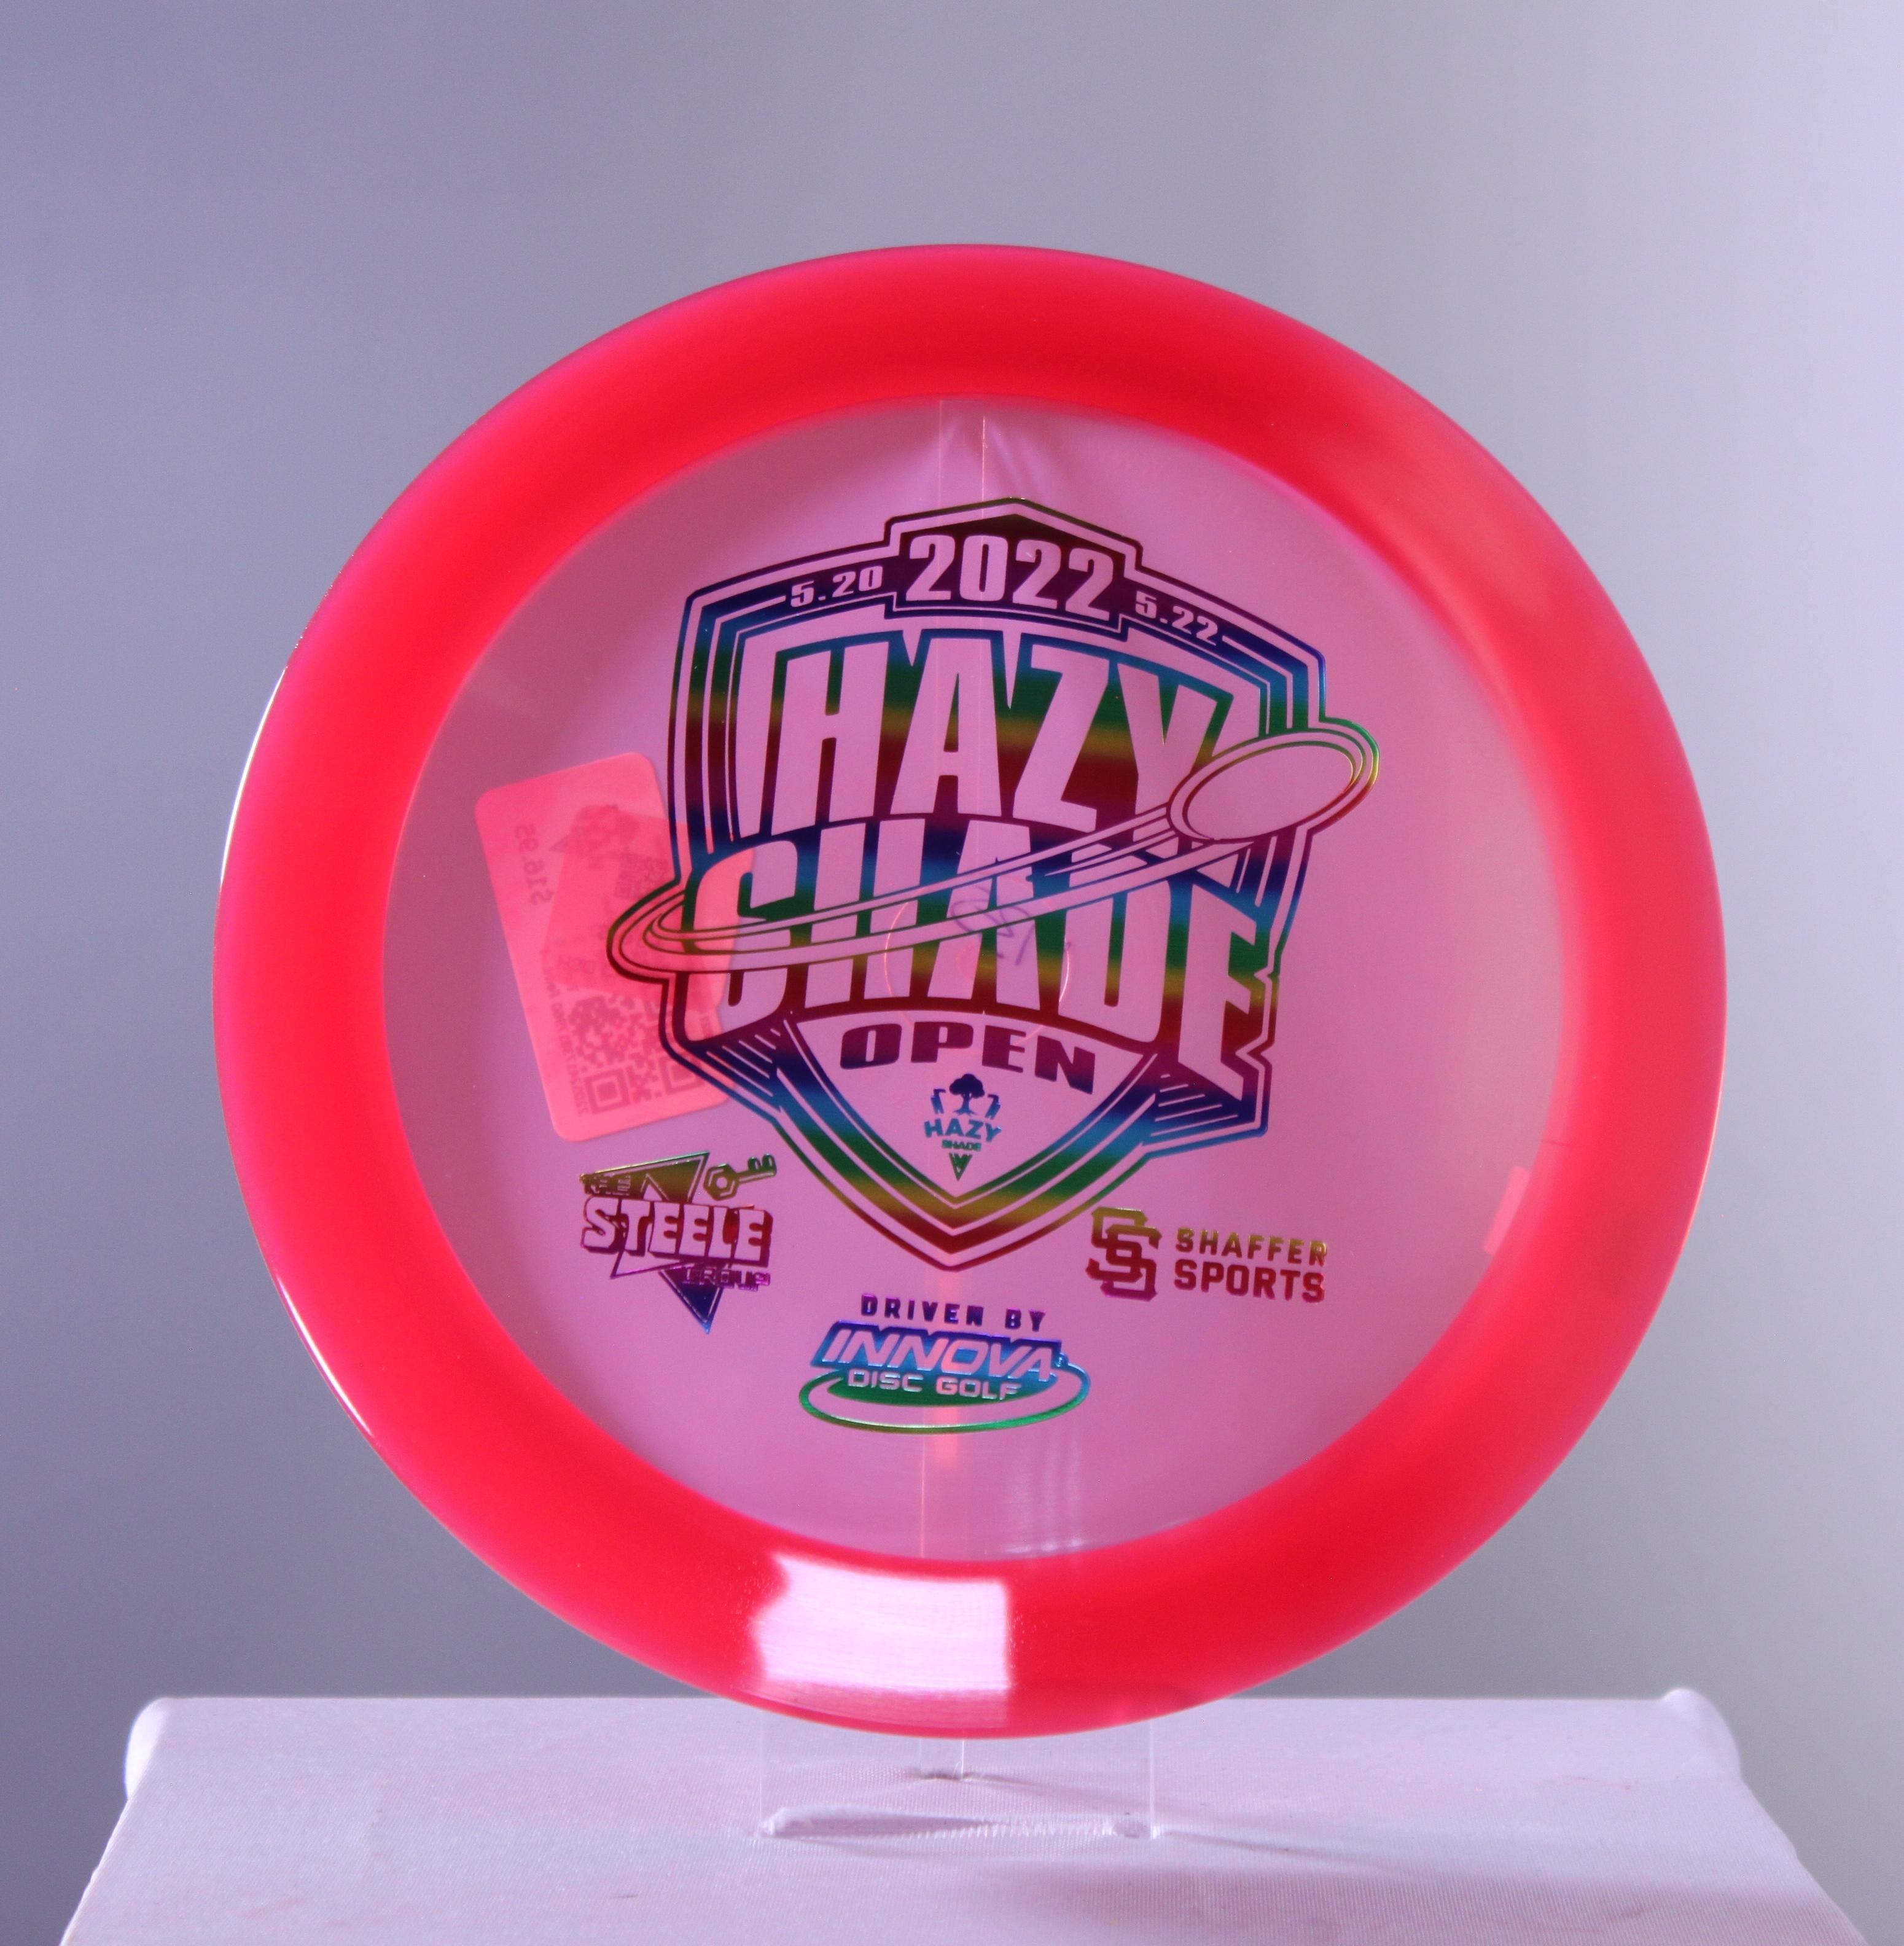 2022 Hazy Shade Open Champion Xcaliber